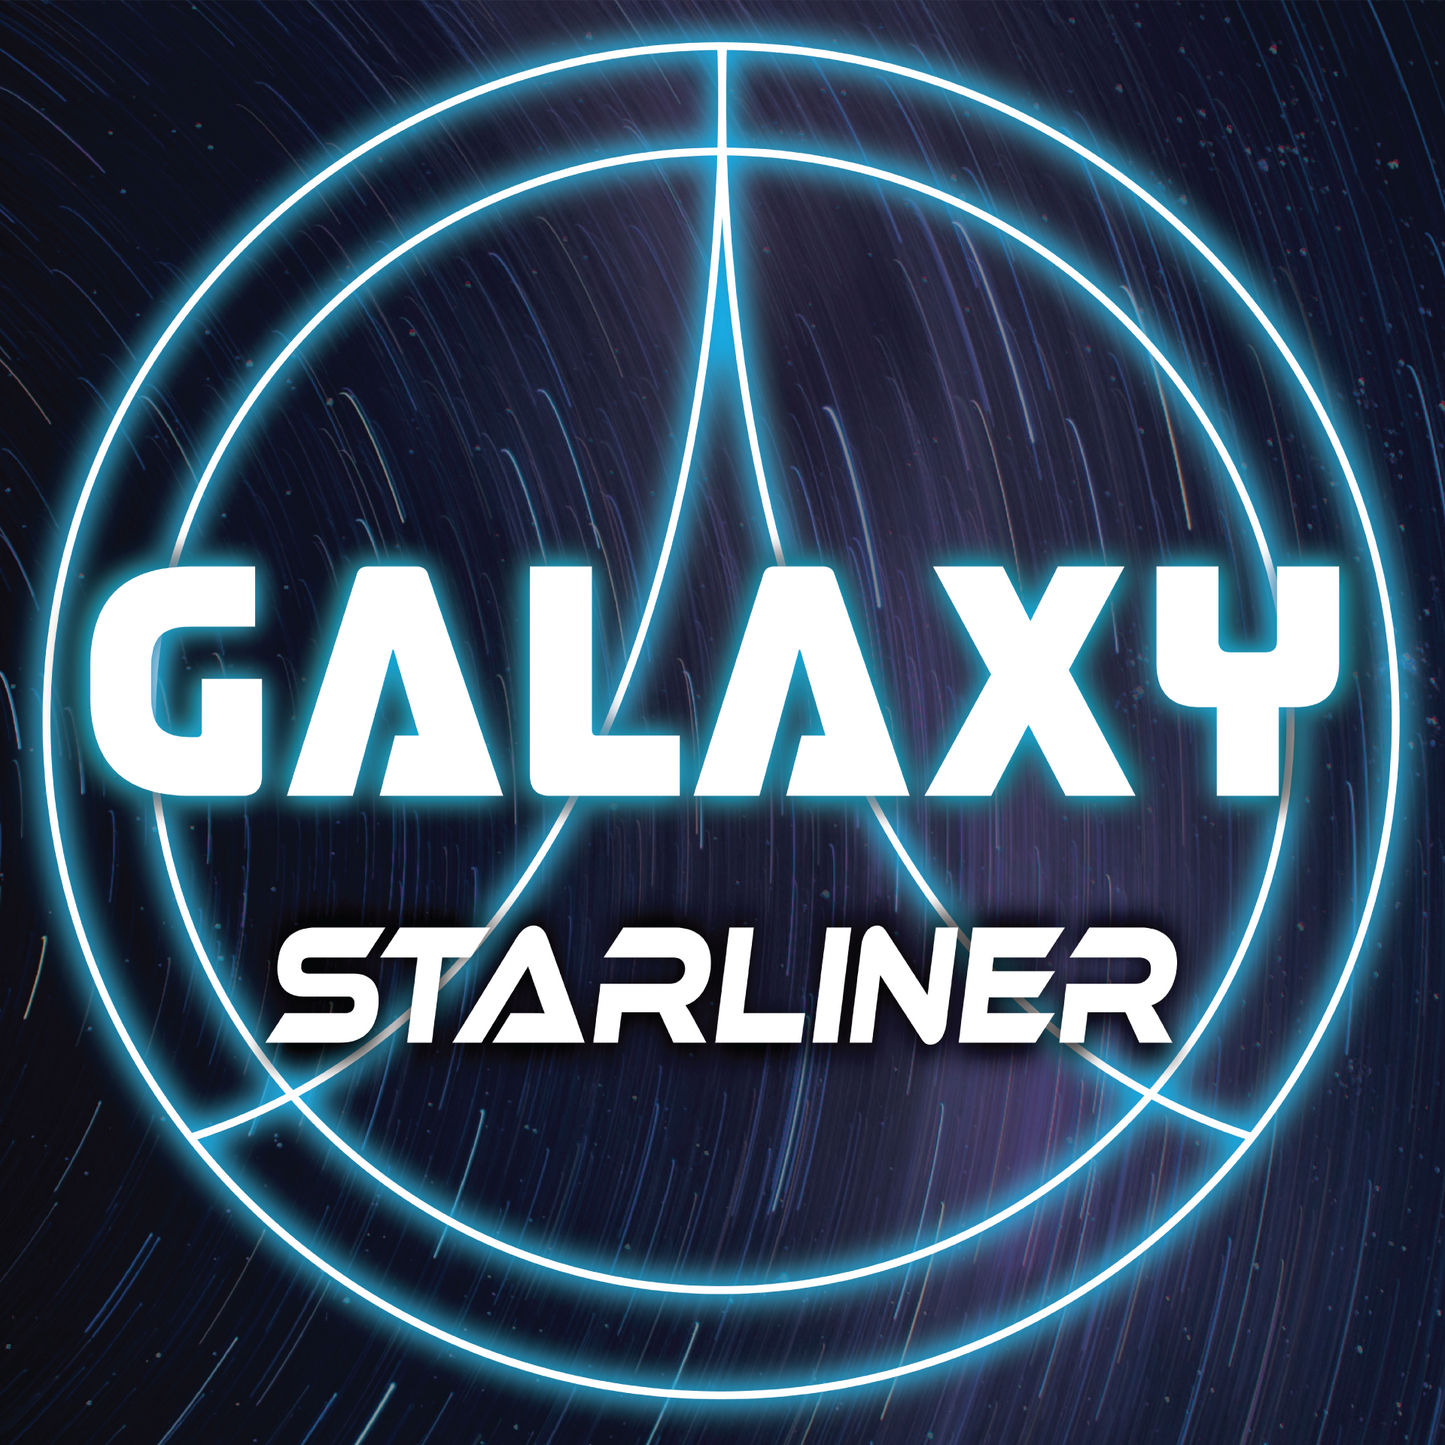 Starliner - Galaxy